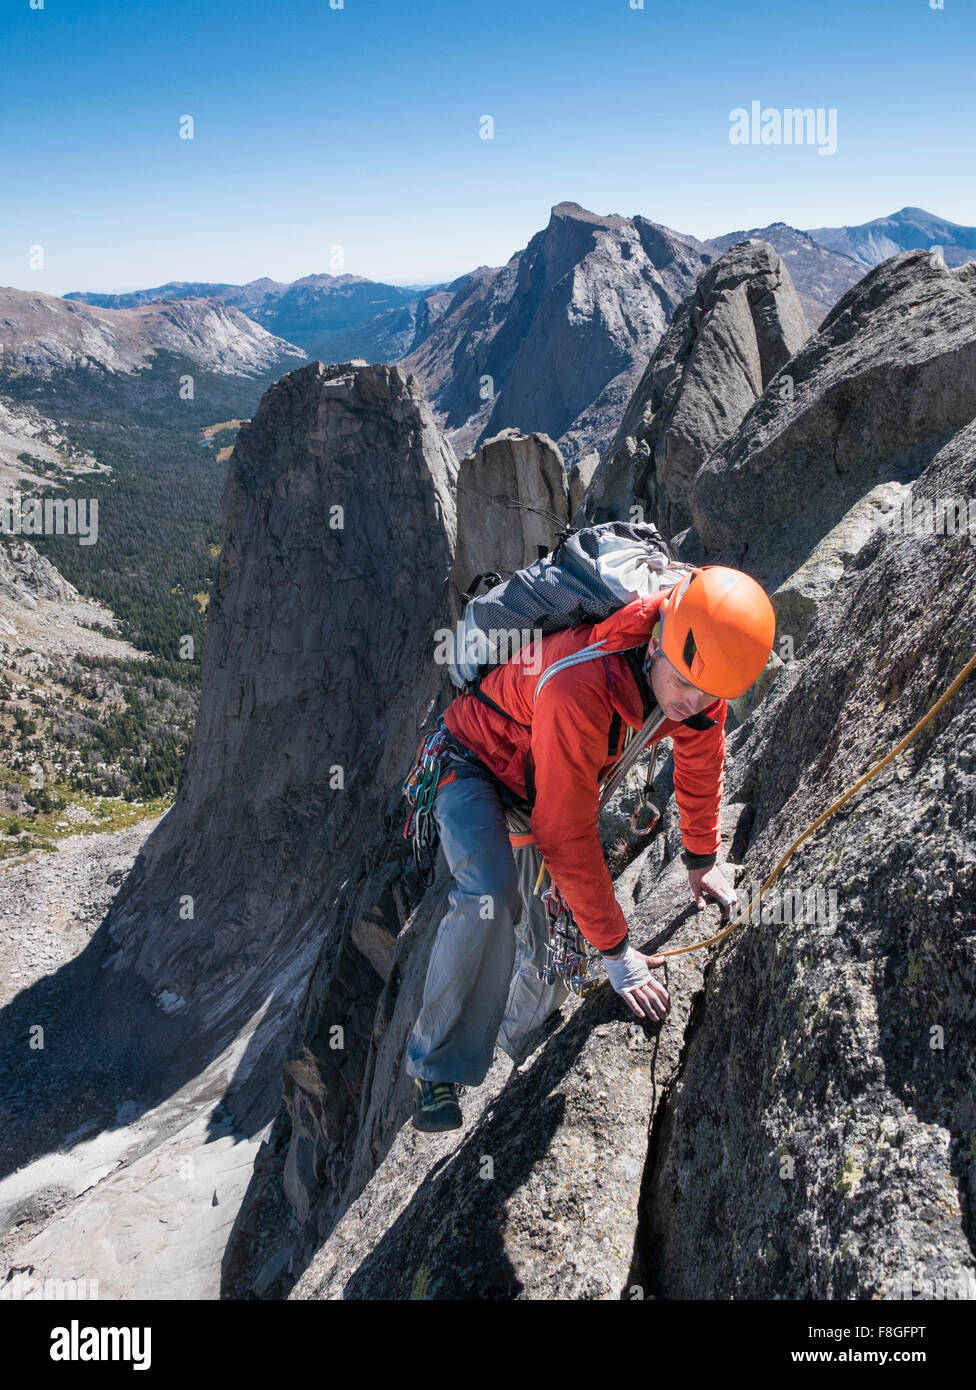 Kaukasische Bergsteiger am Berg Stockfoto